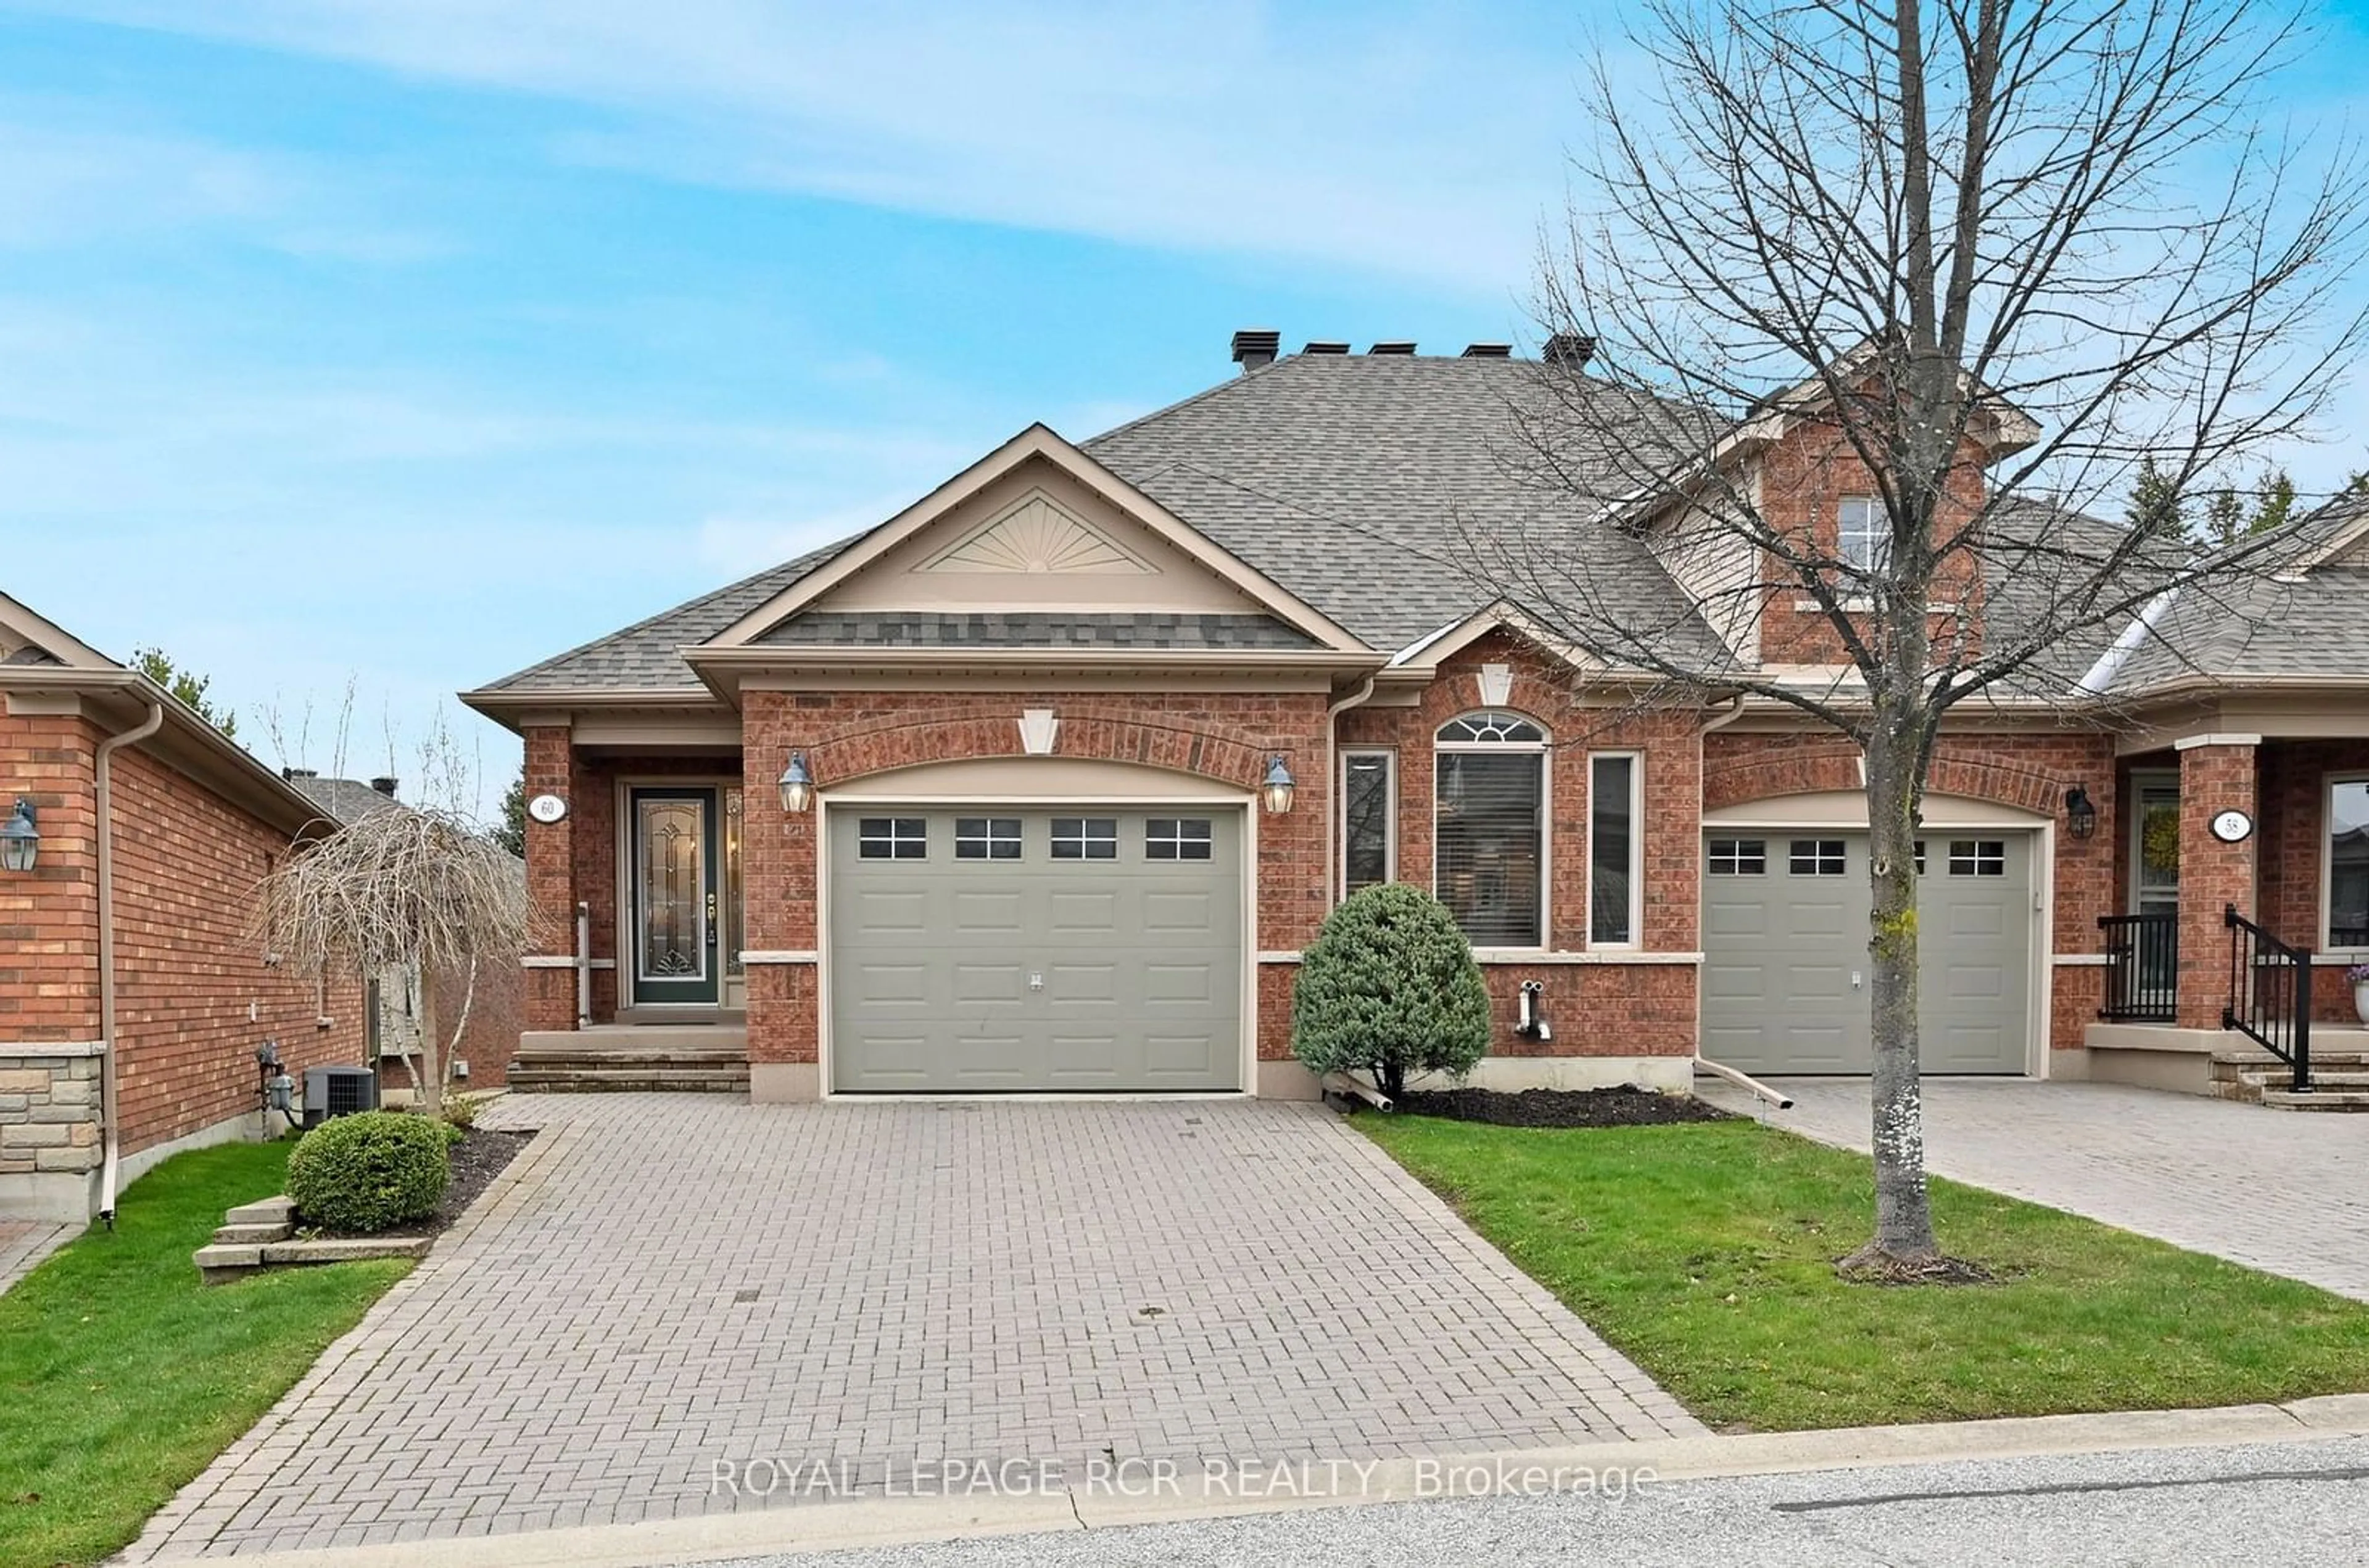 Home with brick exterior material for 60 Renaissance Pt, New Tecumseth Ontario L9R 2H7